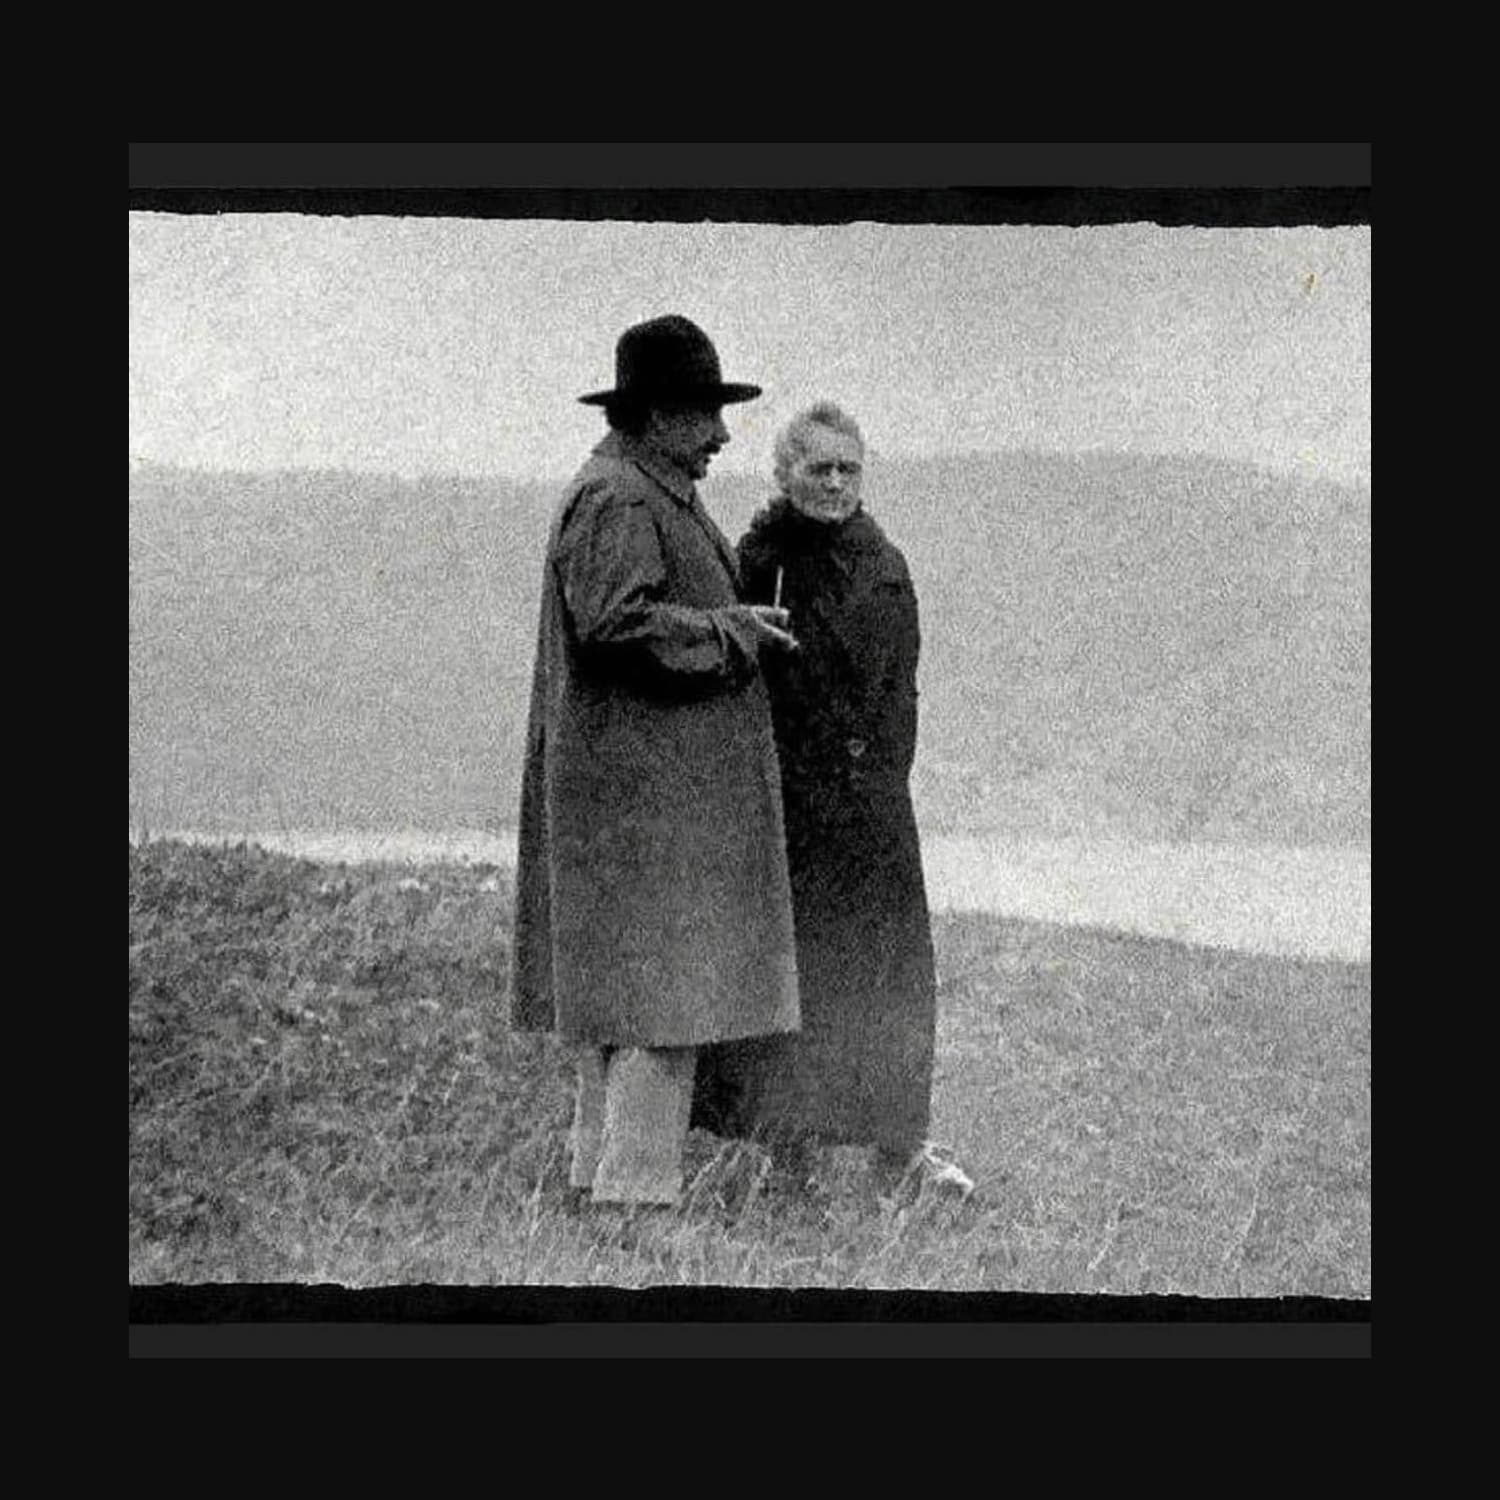 Maria Skłodowska-Curie and Albert Einstein on Lake Geneva, November, 1911.